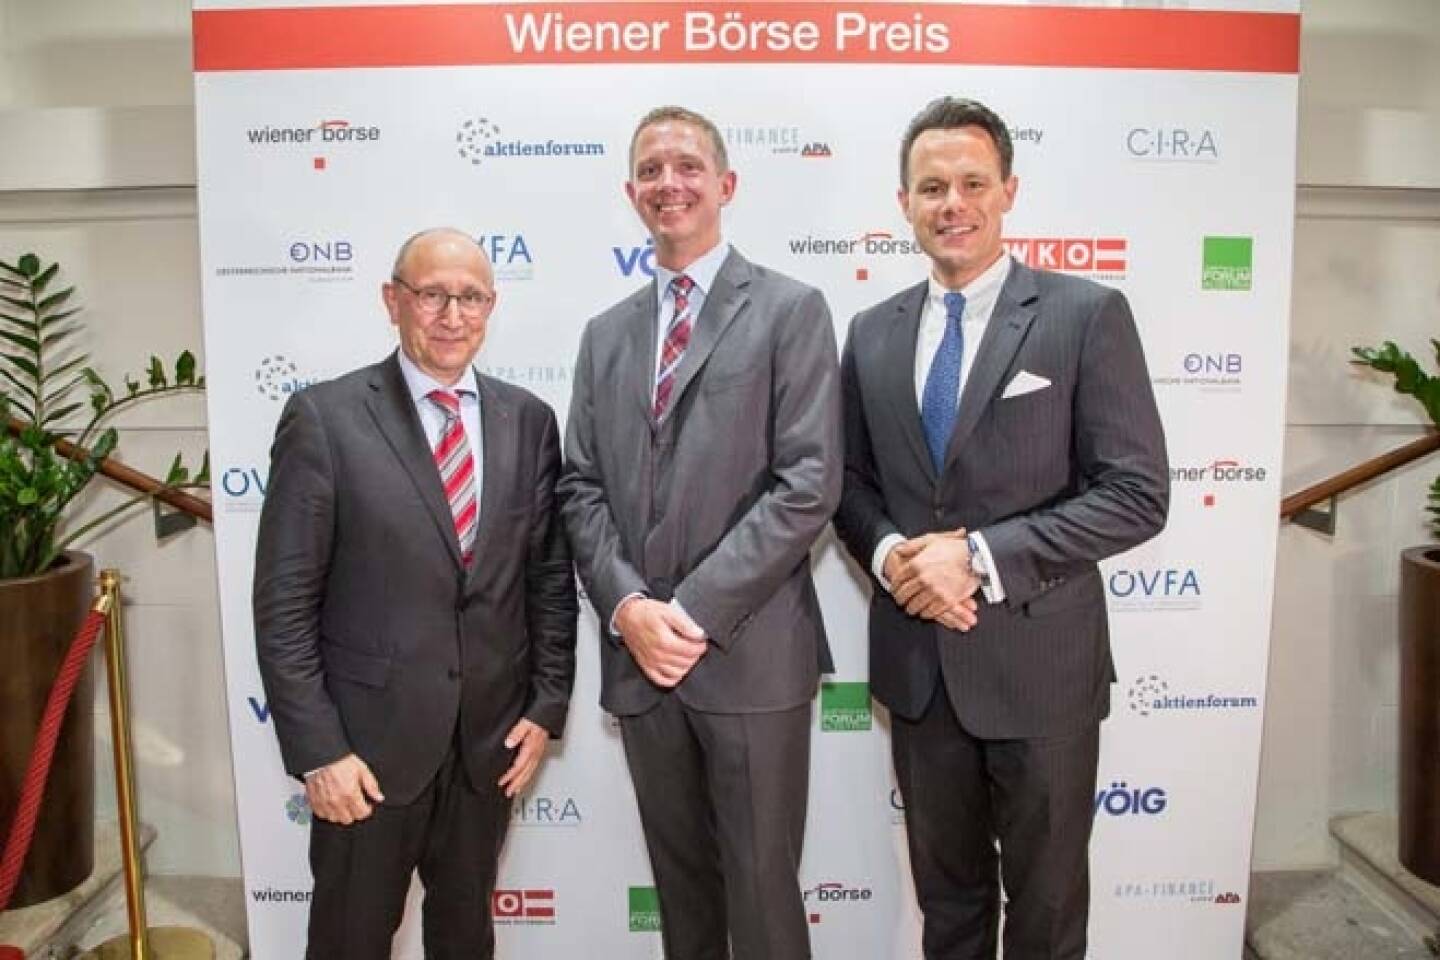 Wiener Börse-Vorstand Ludwig Nießen, Carsten Lütke-Bornefeld (Lang und Schwarz) , Börse-CEO Christoph Boschan; Credit: APA-Fotoservice
